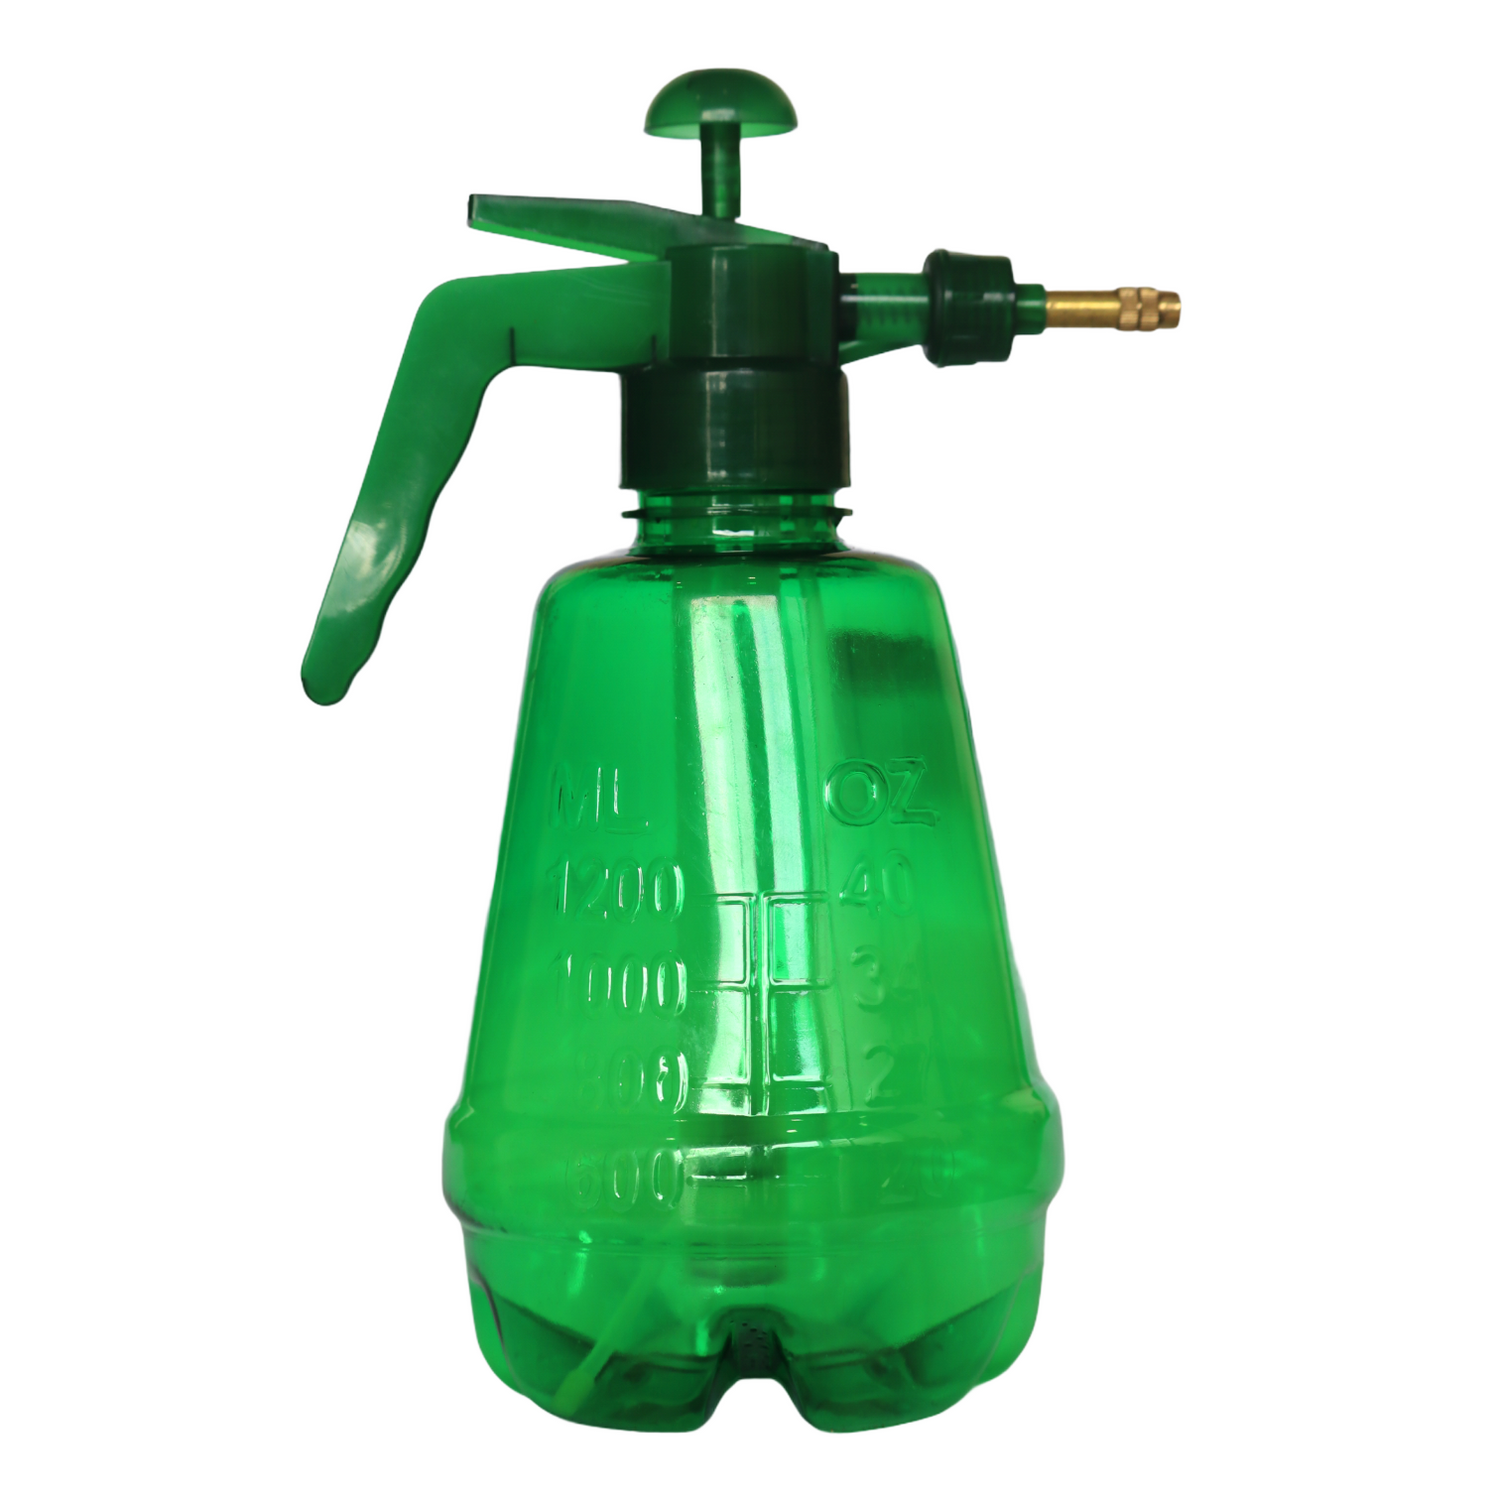  0.5 Gallon Hand Pump Sprayer, Hand Held Garden Sprayer, Water  Spray Unit with Adjustable Nozzle and Extra Extended Spray : Patio, Lawn &  Garden